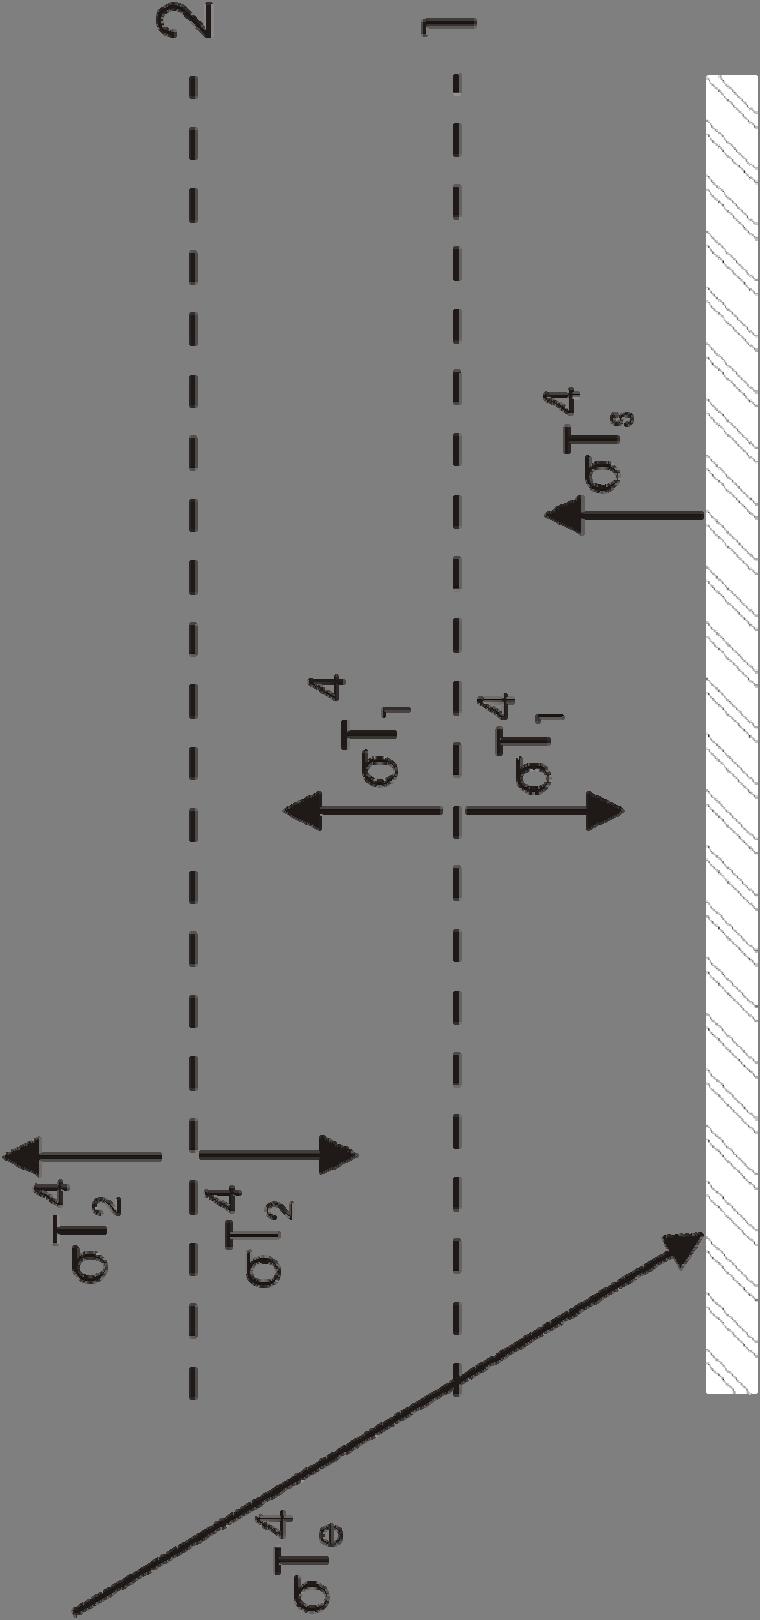 Two-Layer Model TOA: σt = σt T = T 4 4 2 e